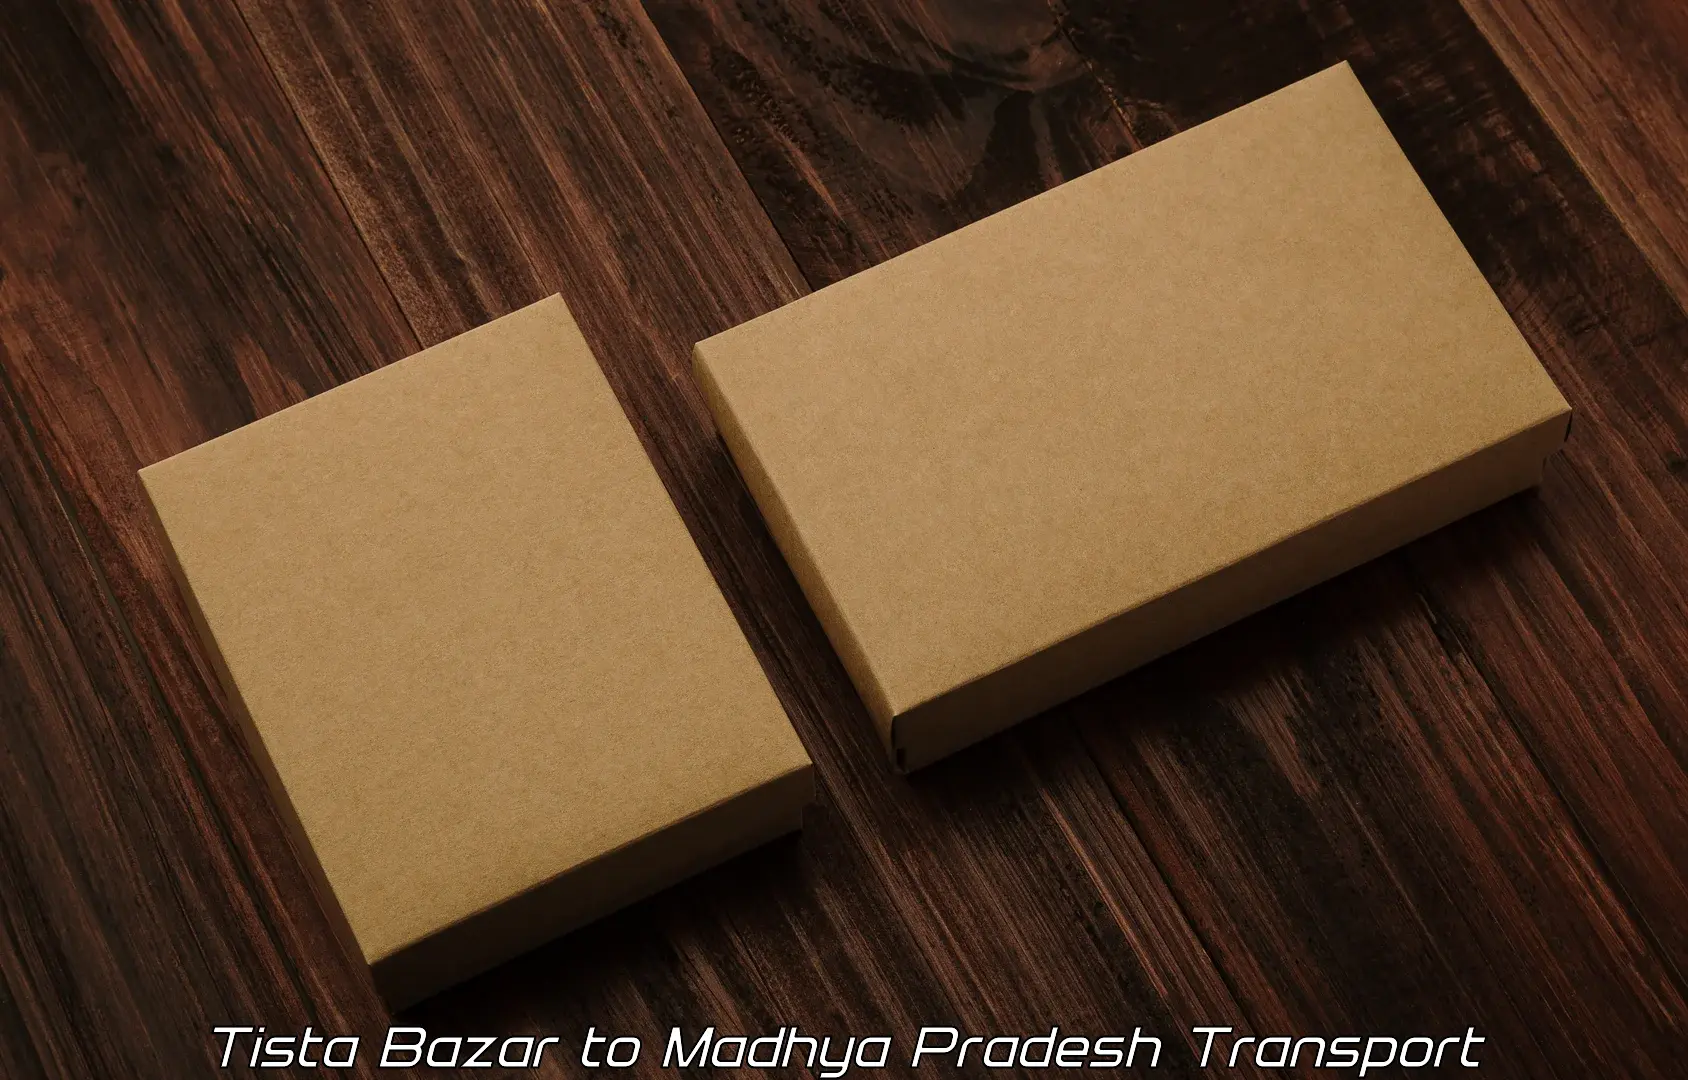 Package delivery services in Tista Bazar to Badnagar